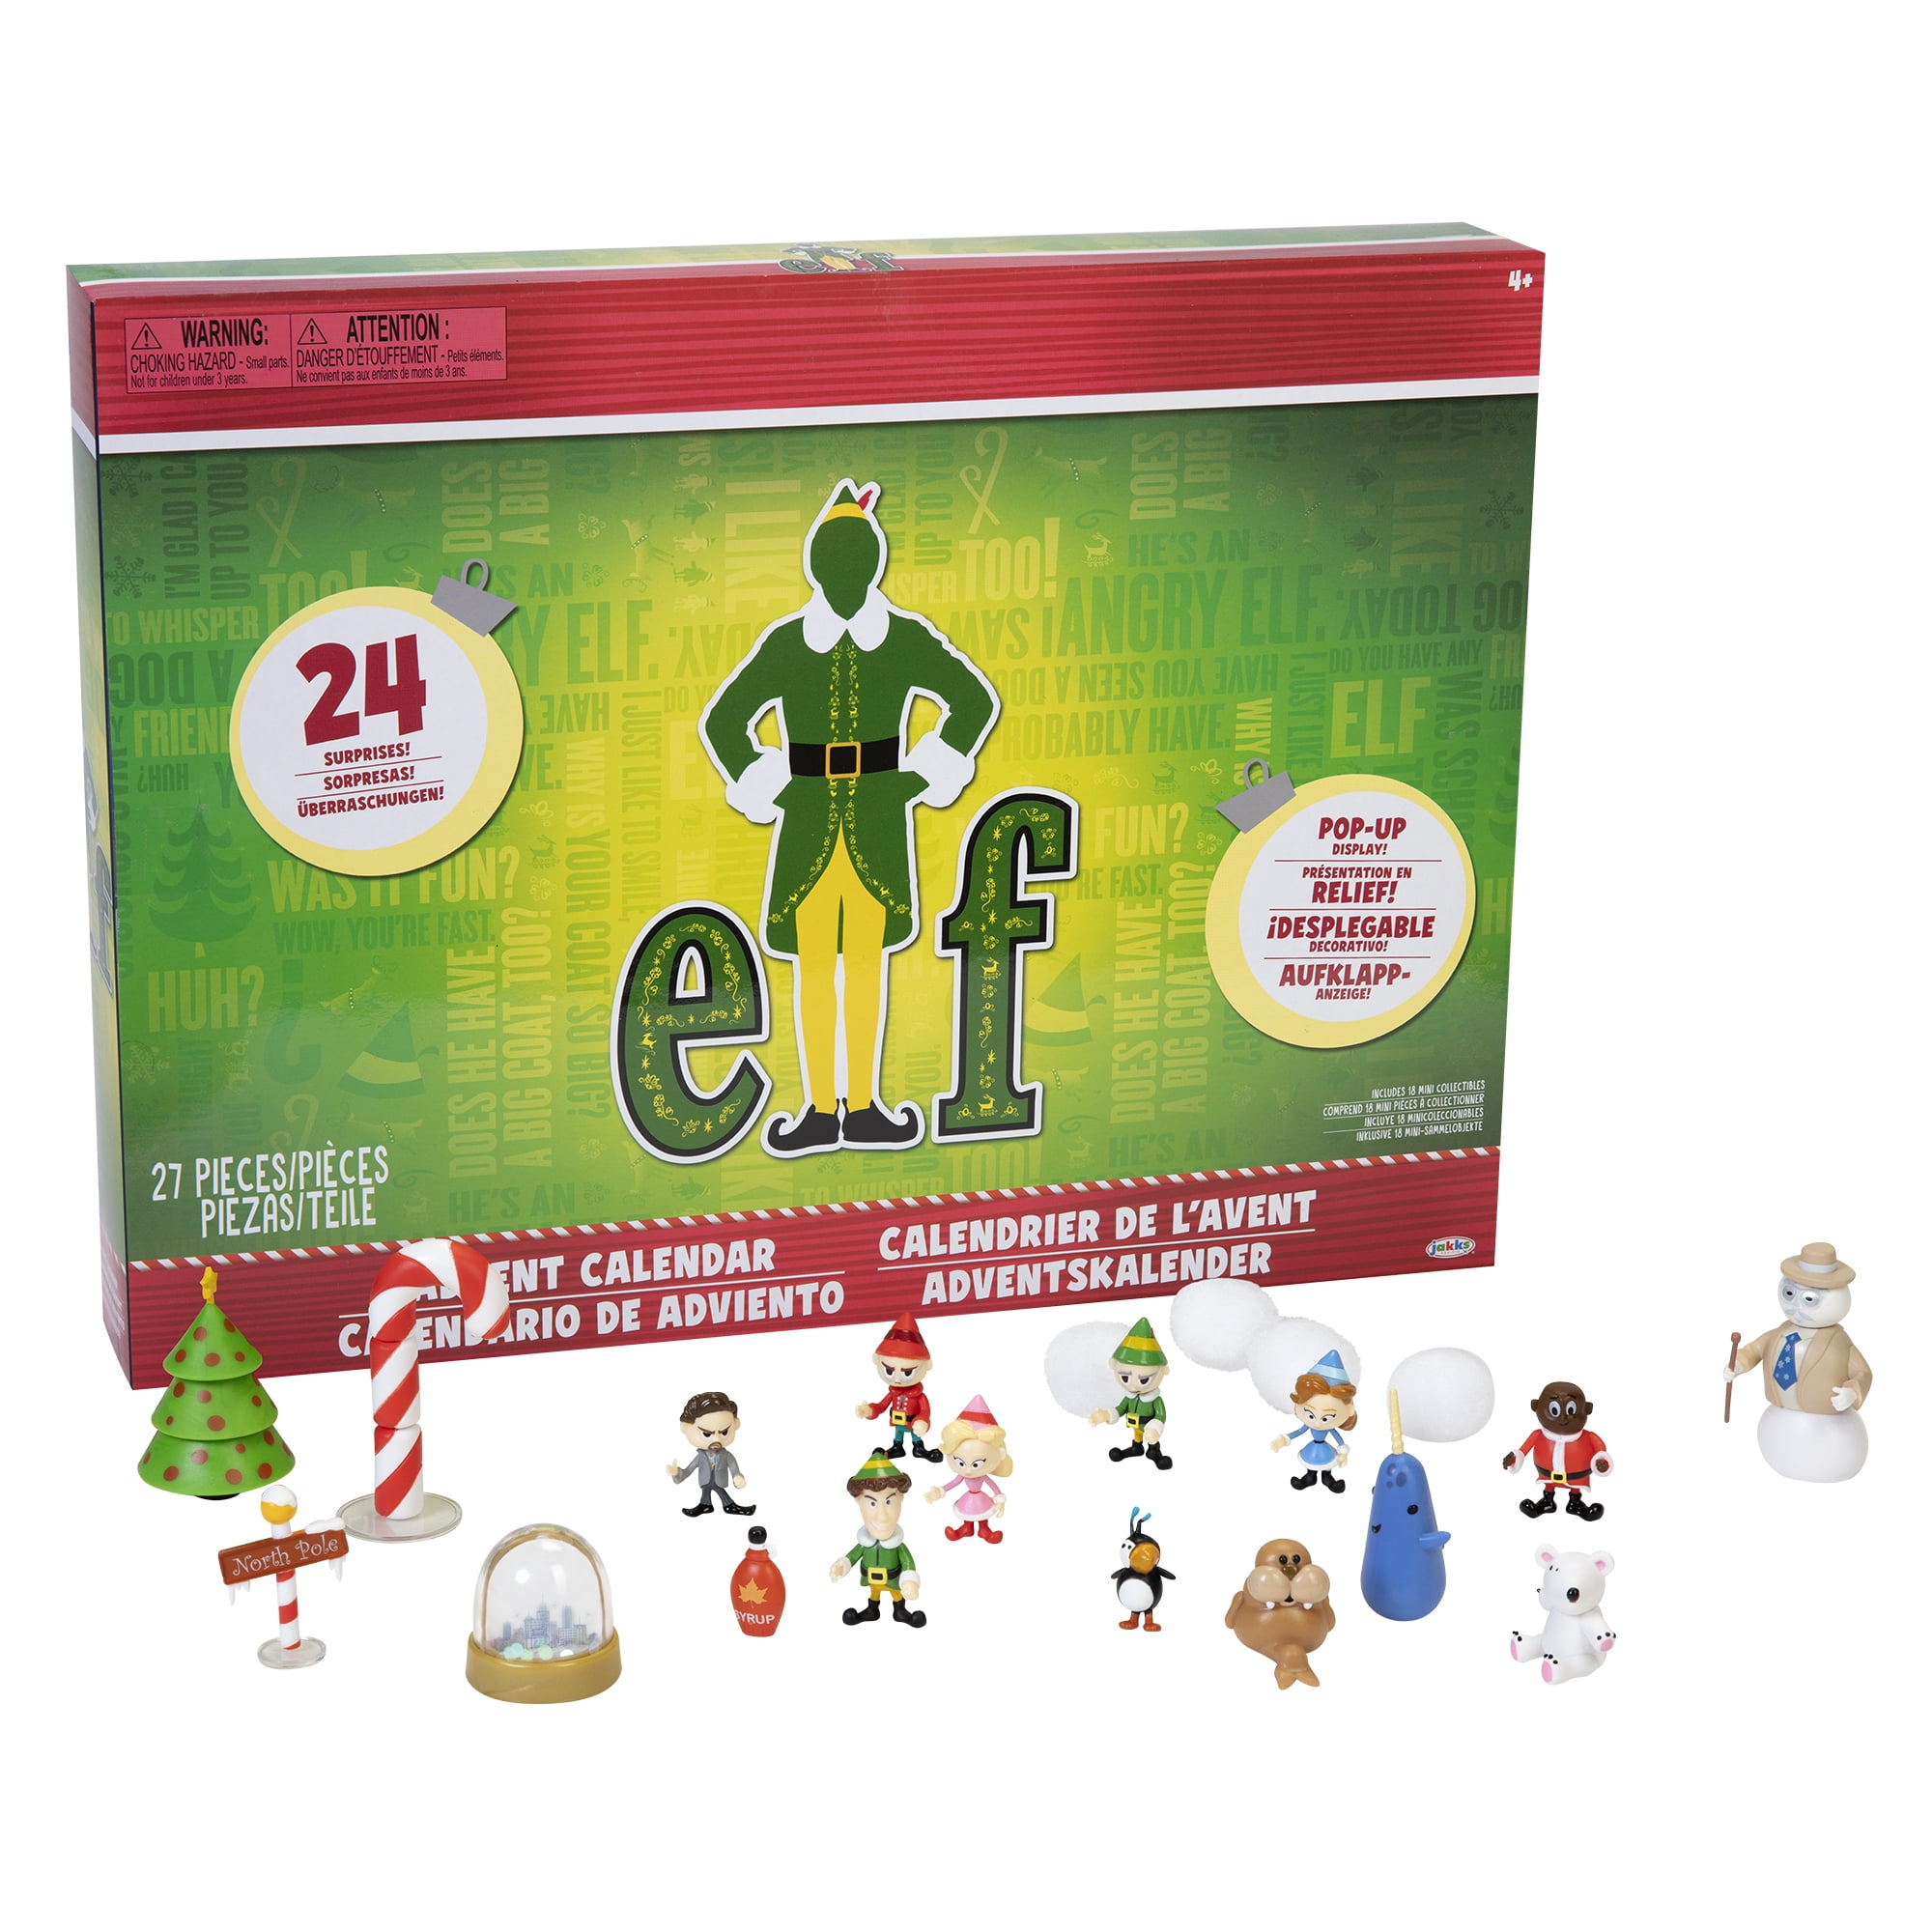 Elf Collectible Advent Calendar Includes 17 Collectible Figurines